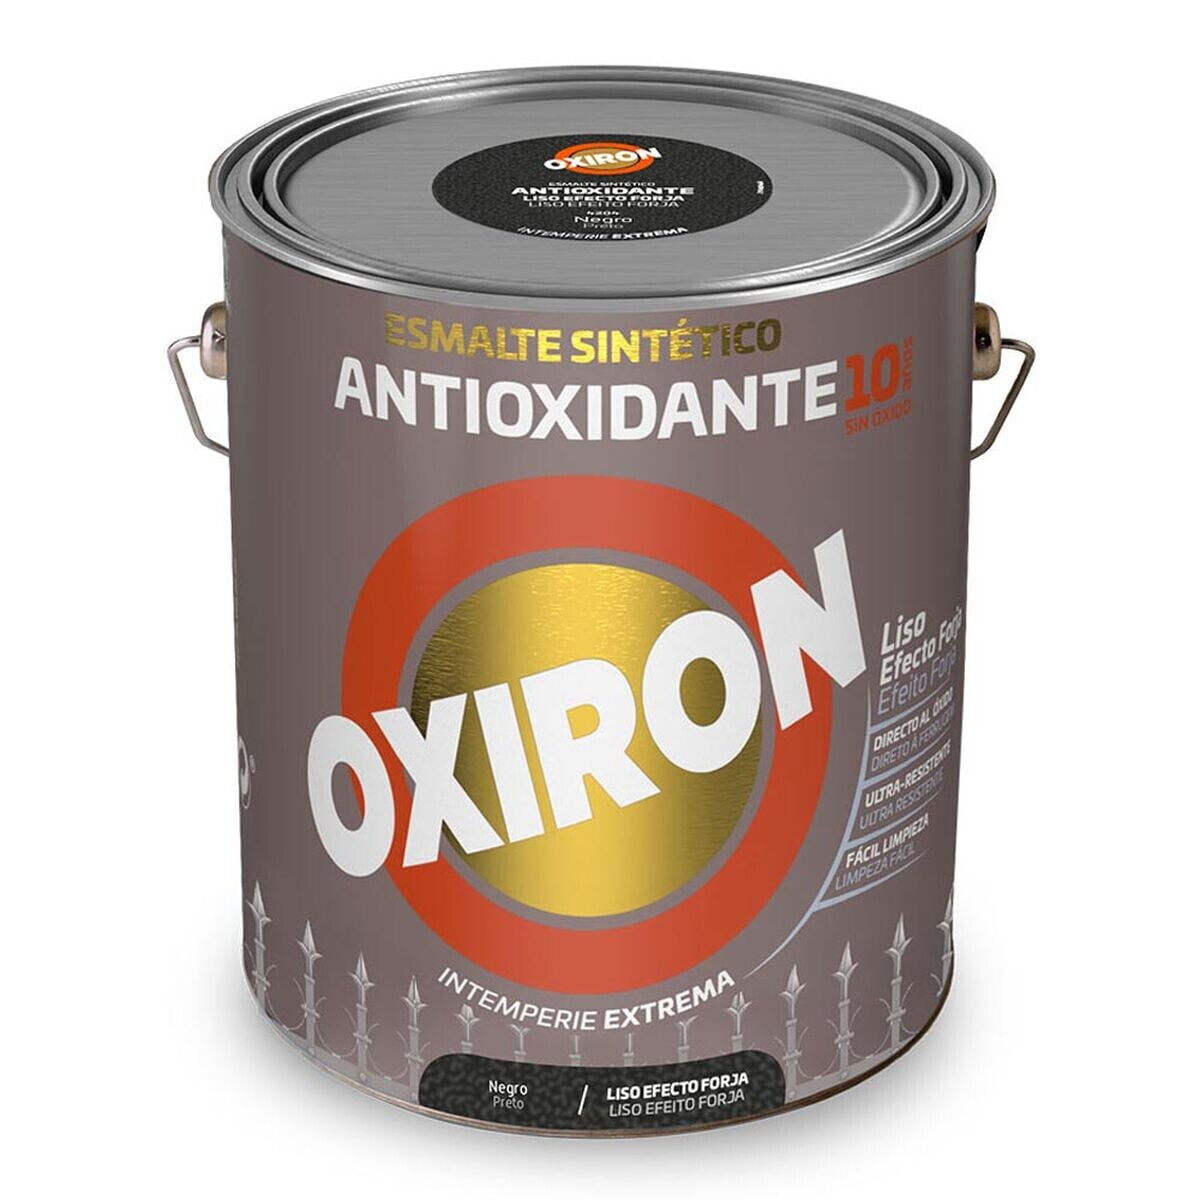 Synthetic enamel paint Oxiron Titan 5809095 Black Antioxidant